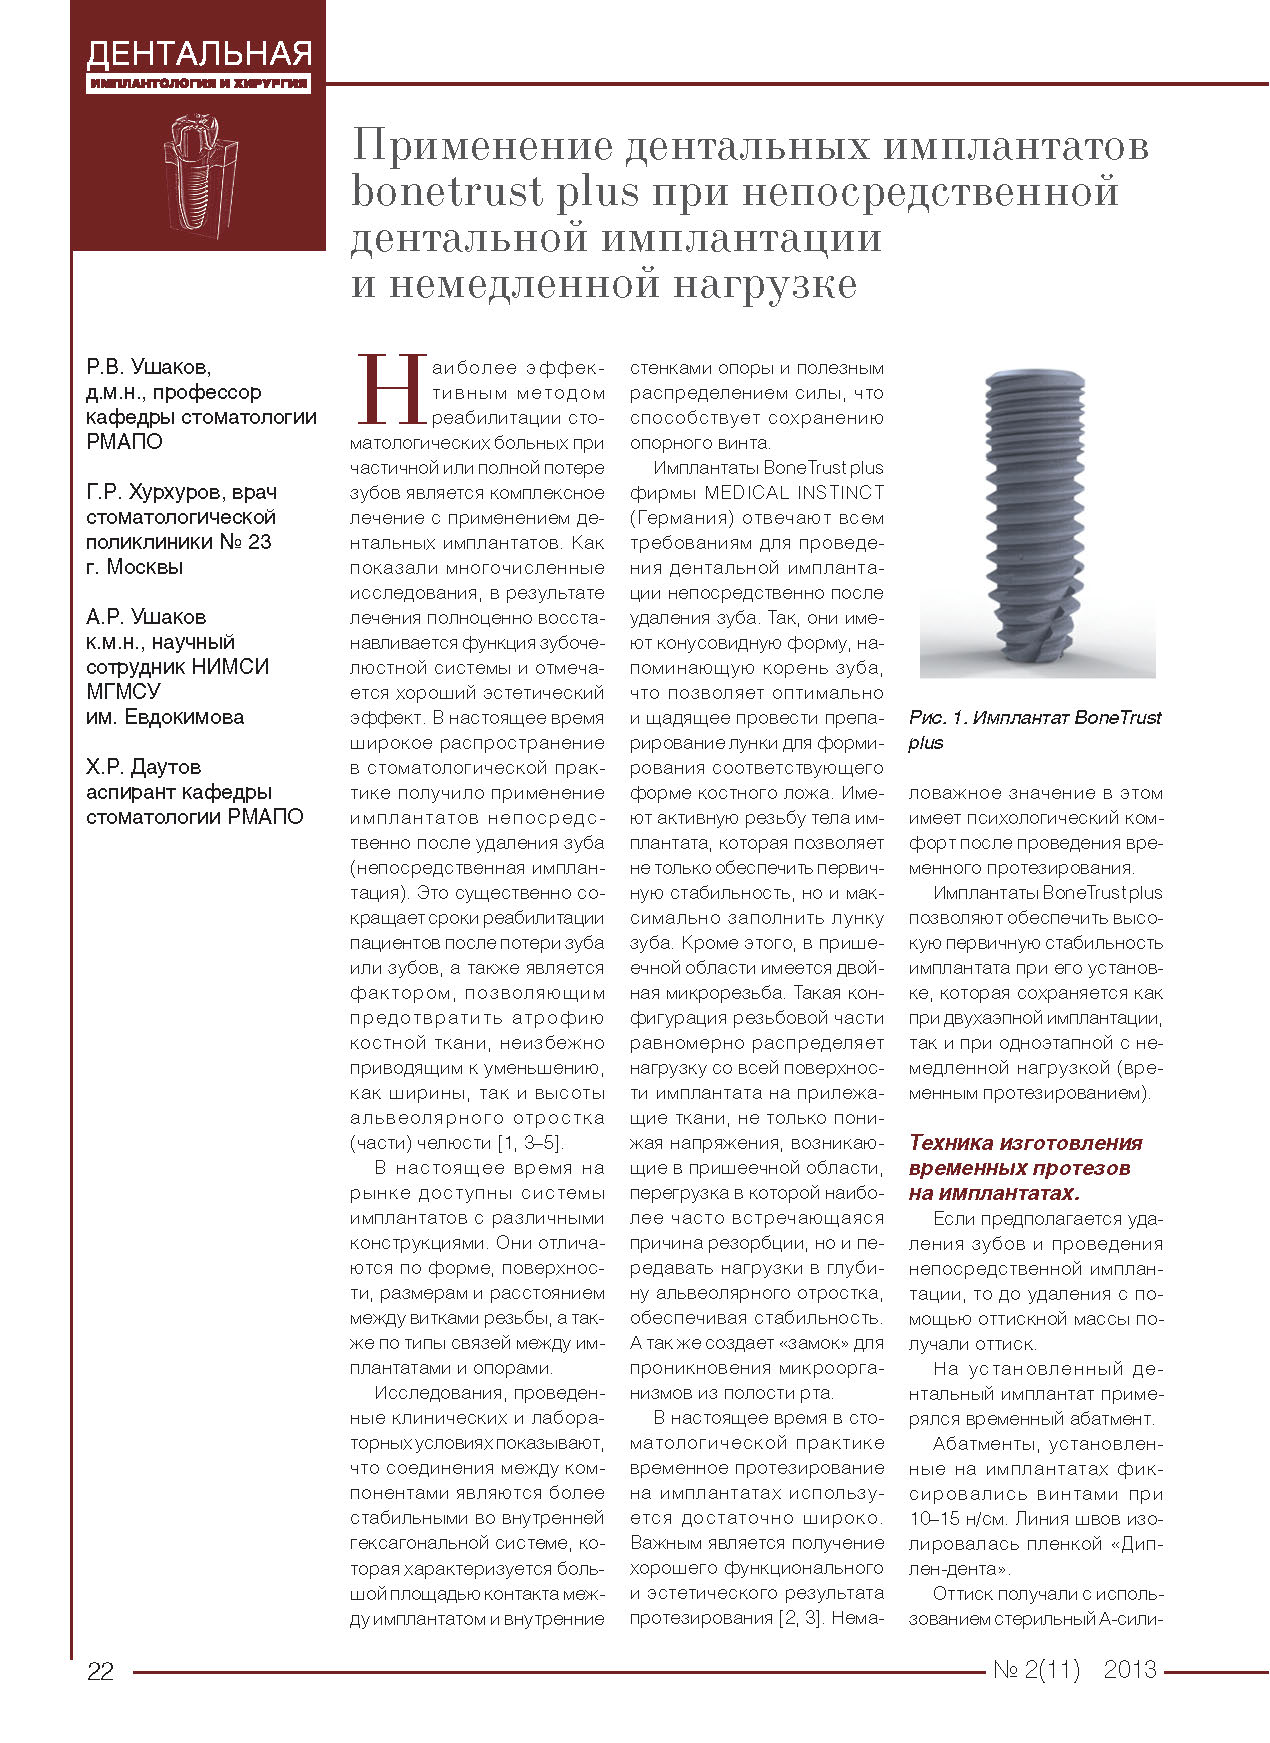 Implantatsysteme BoneTrust Plus – Russisch 01 2013